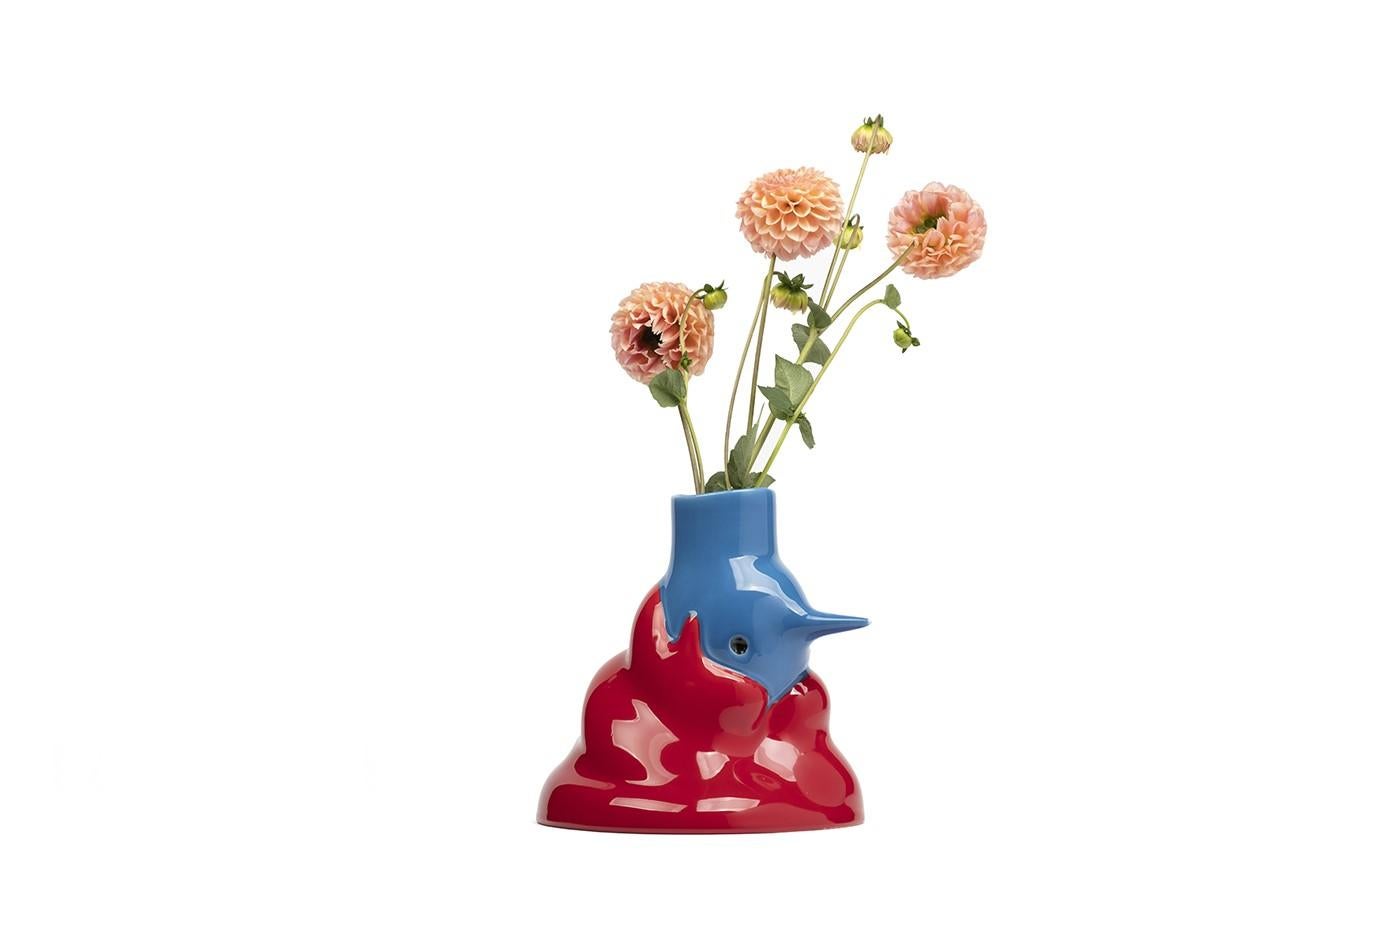 PIET PARRA The Upside Down Face Vase Hand Painted Limited Edition Flower Vase For Sale 2